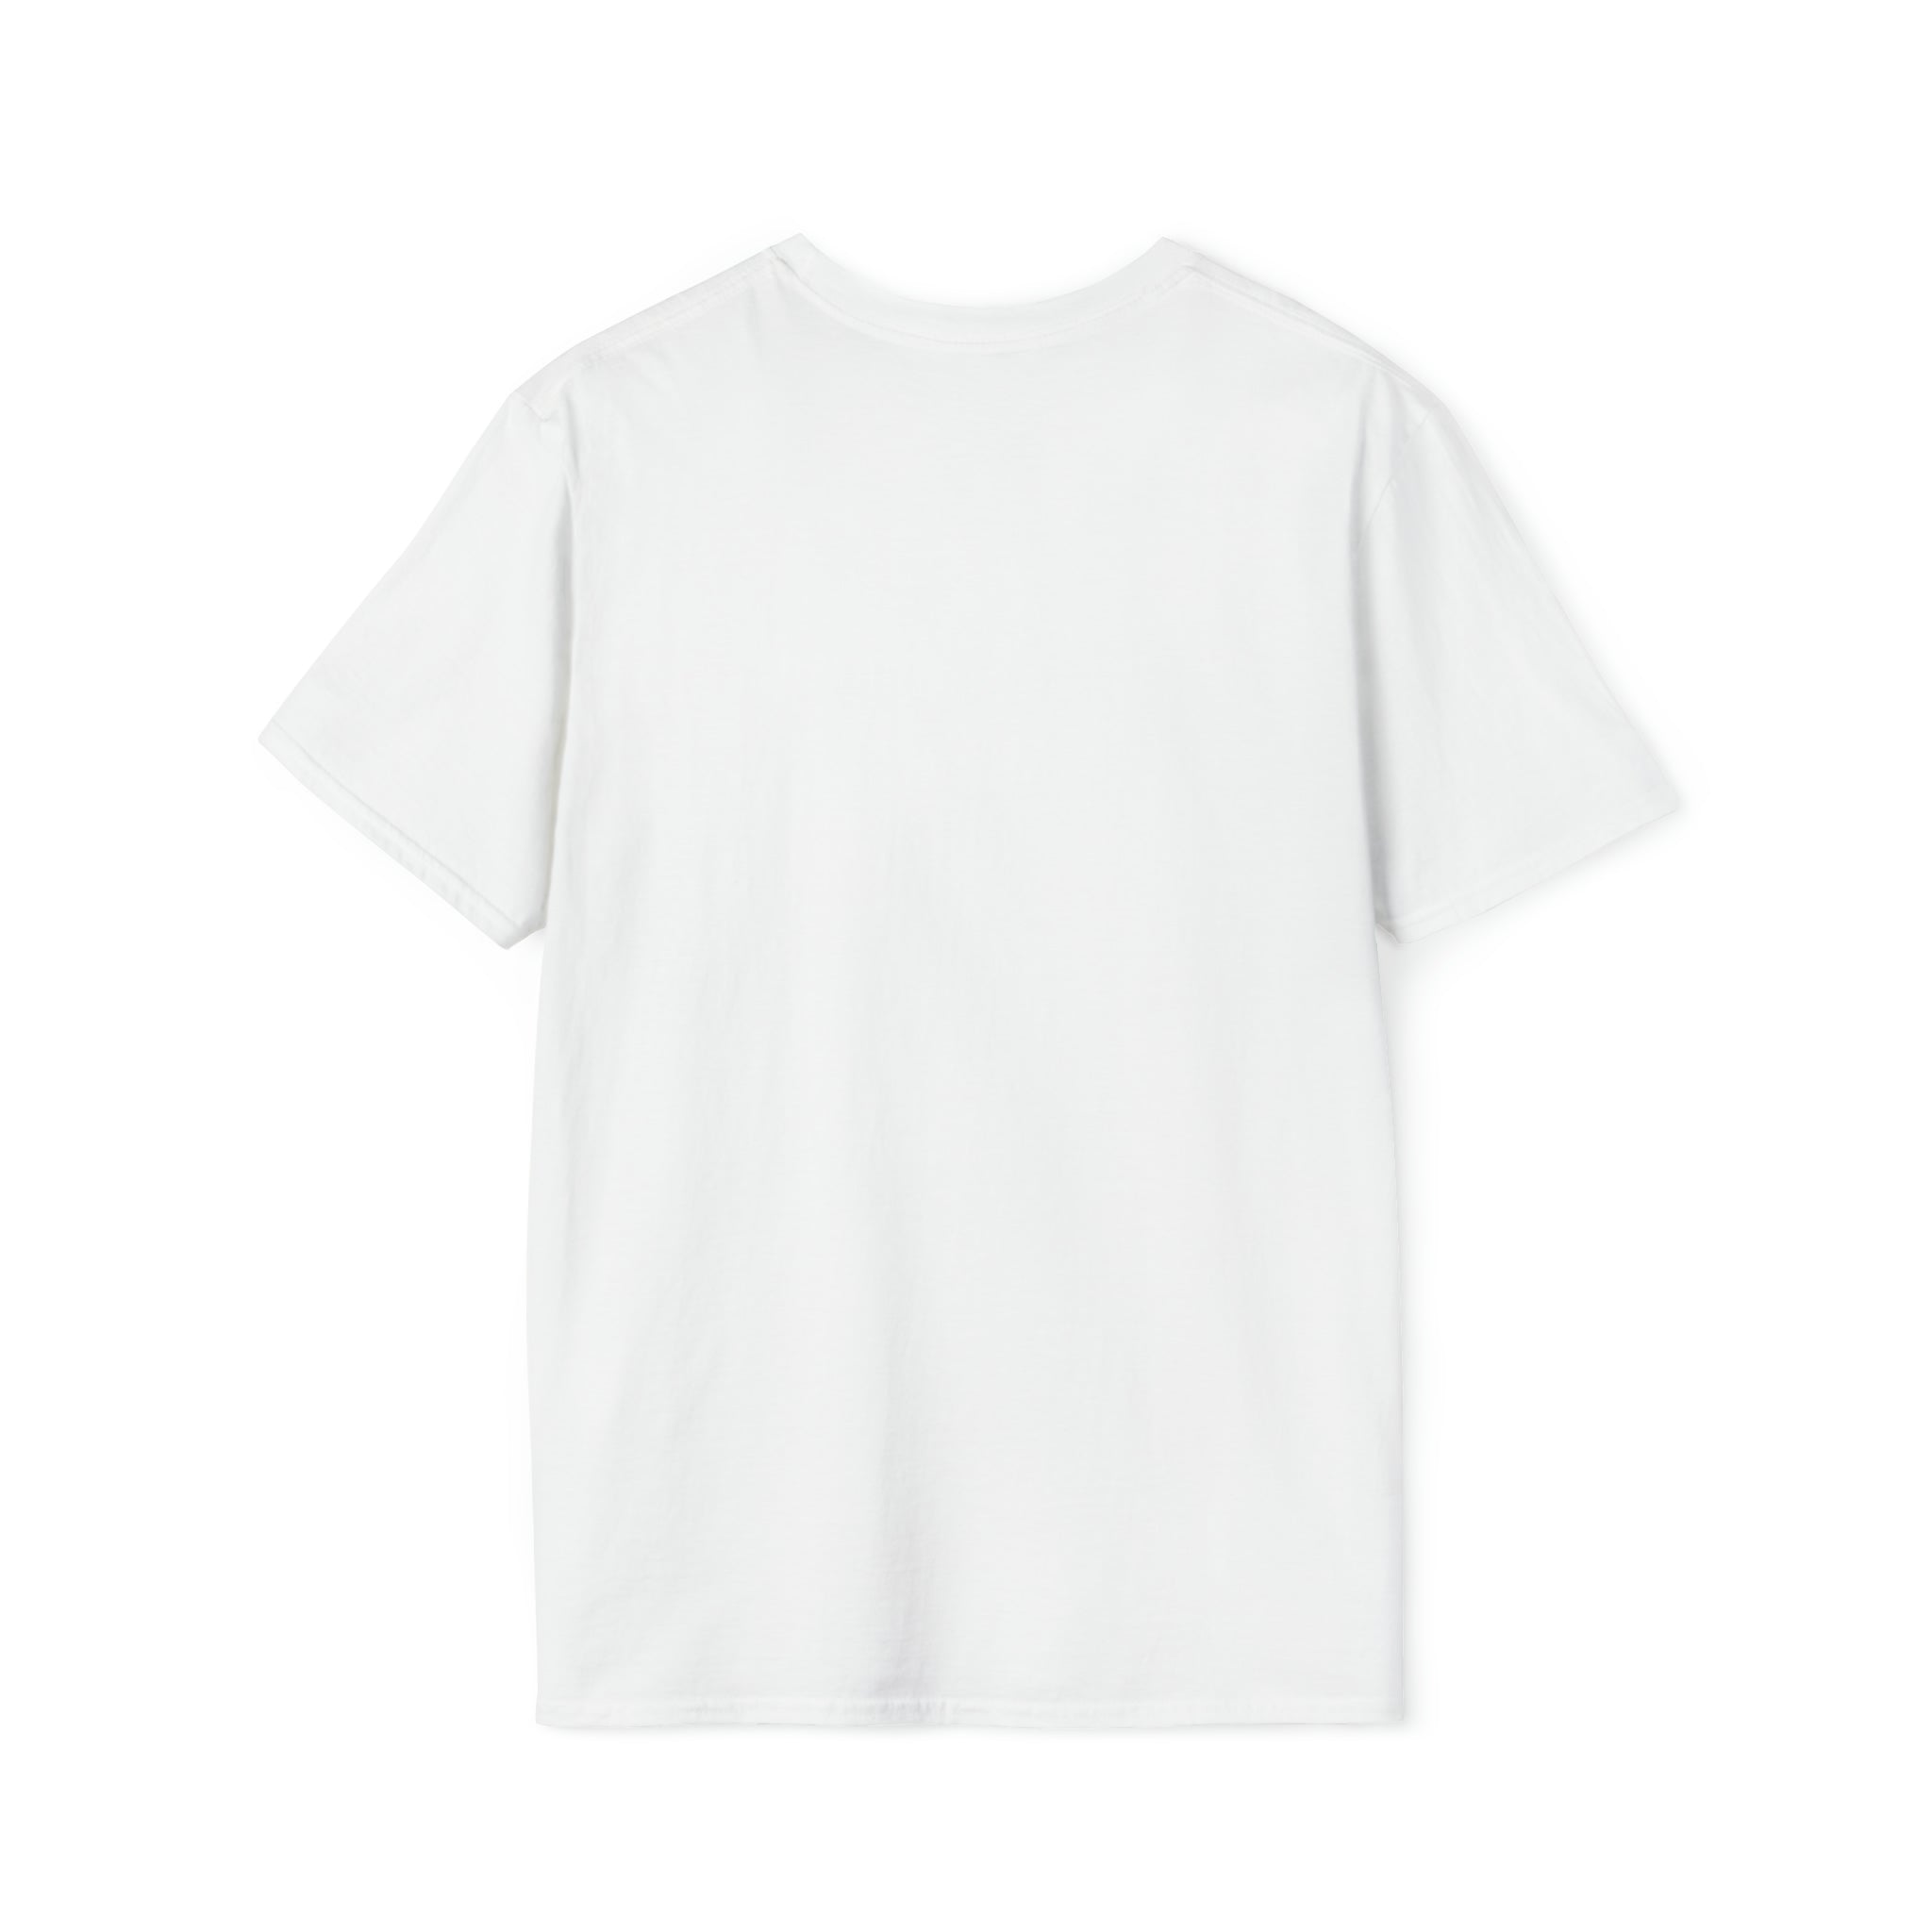 Let go - Unisex Softstyle T-Shirt (USA)